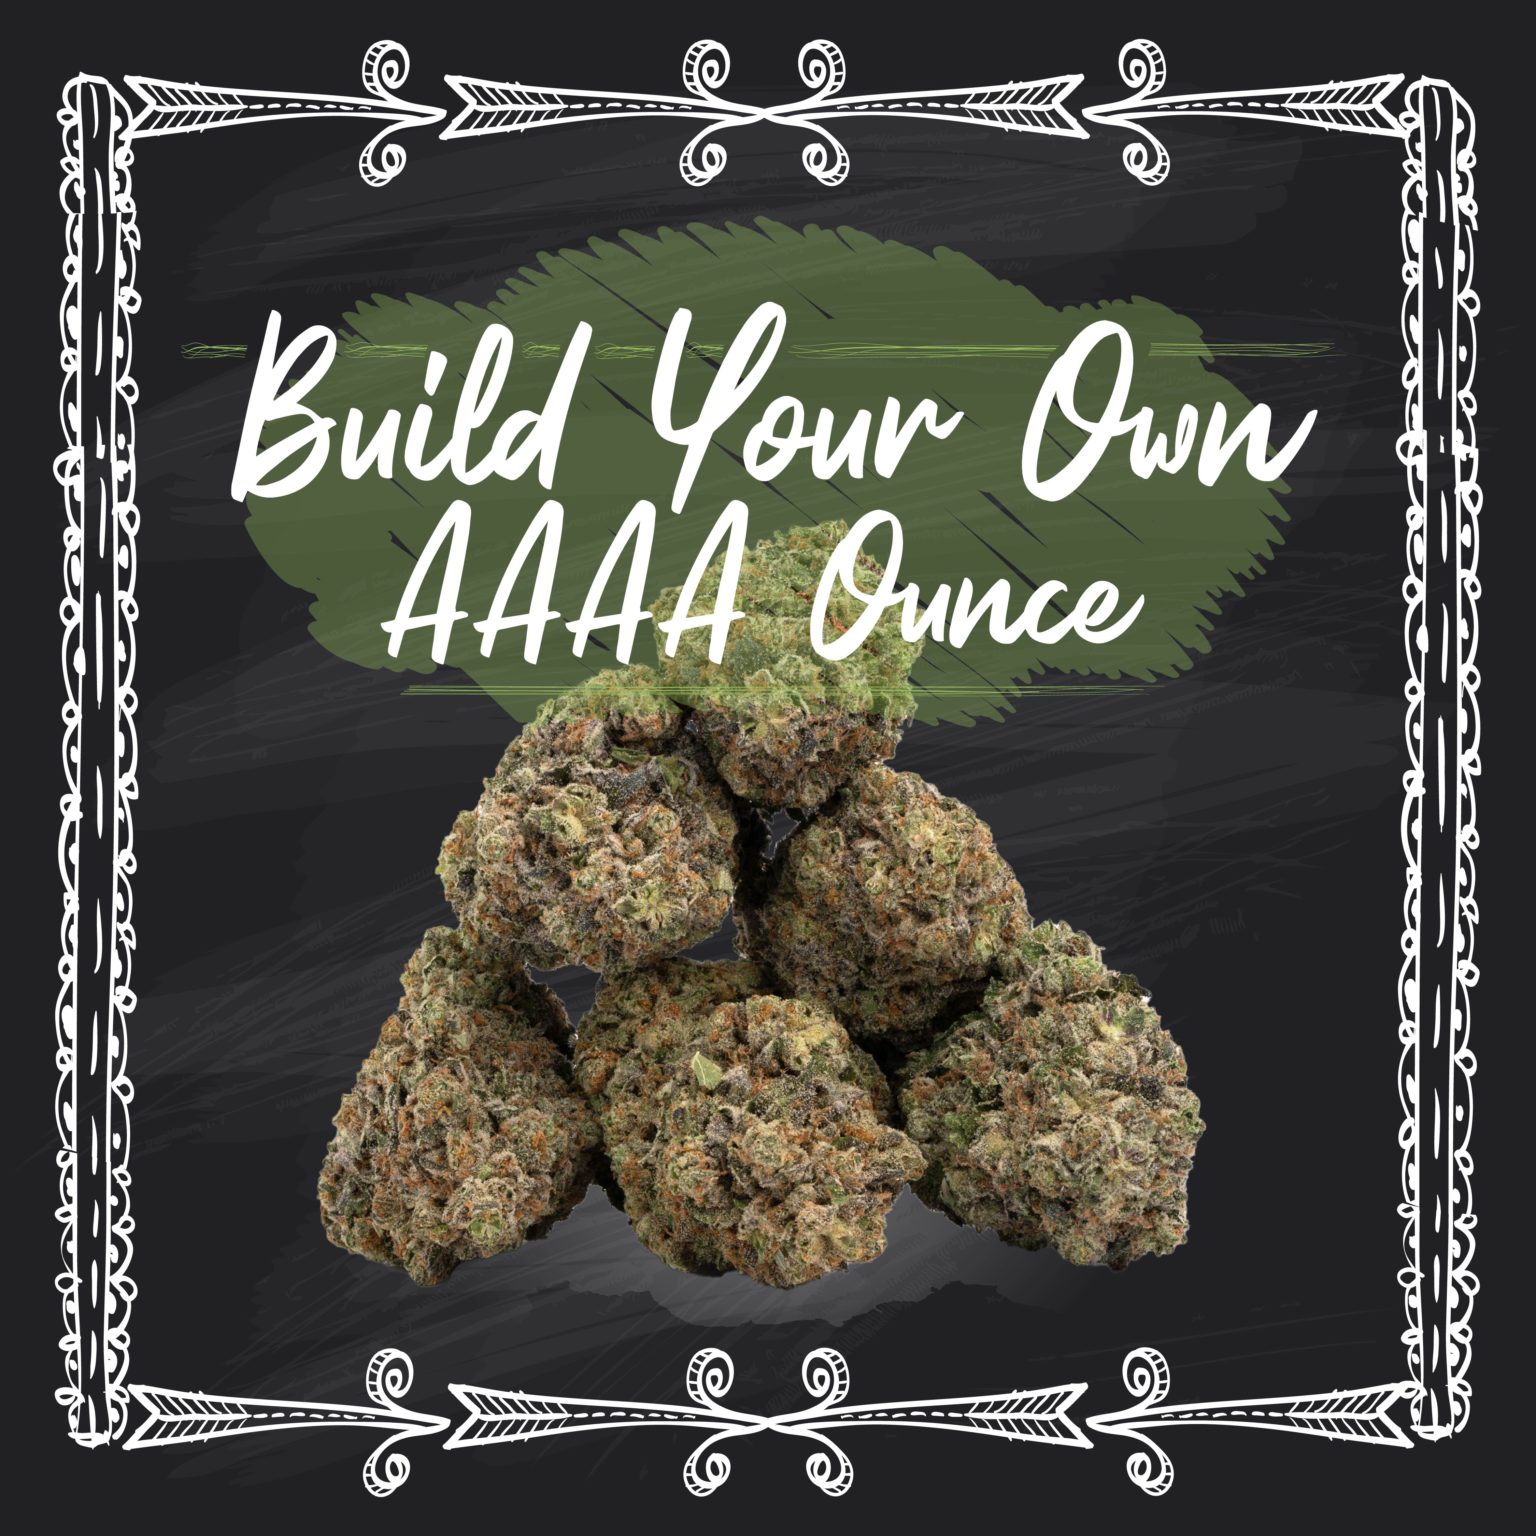 Build Your Own AAAA Ounce